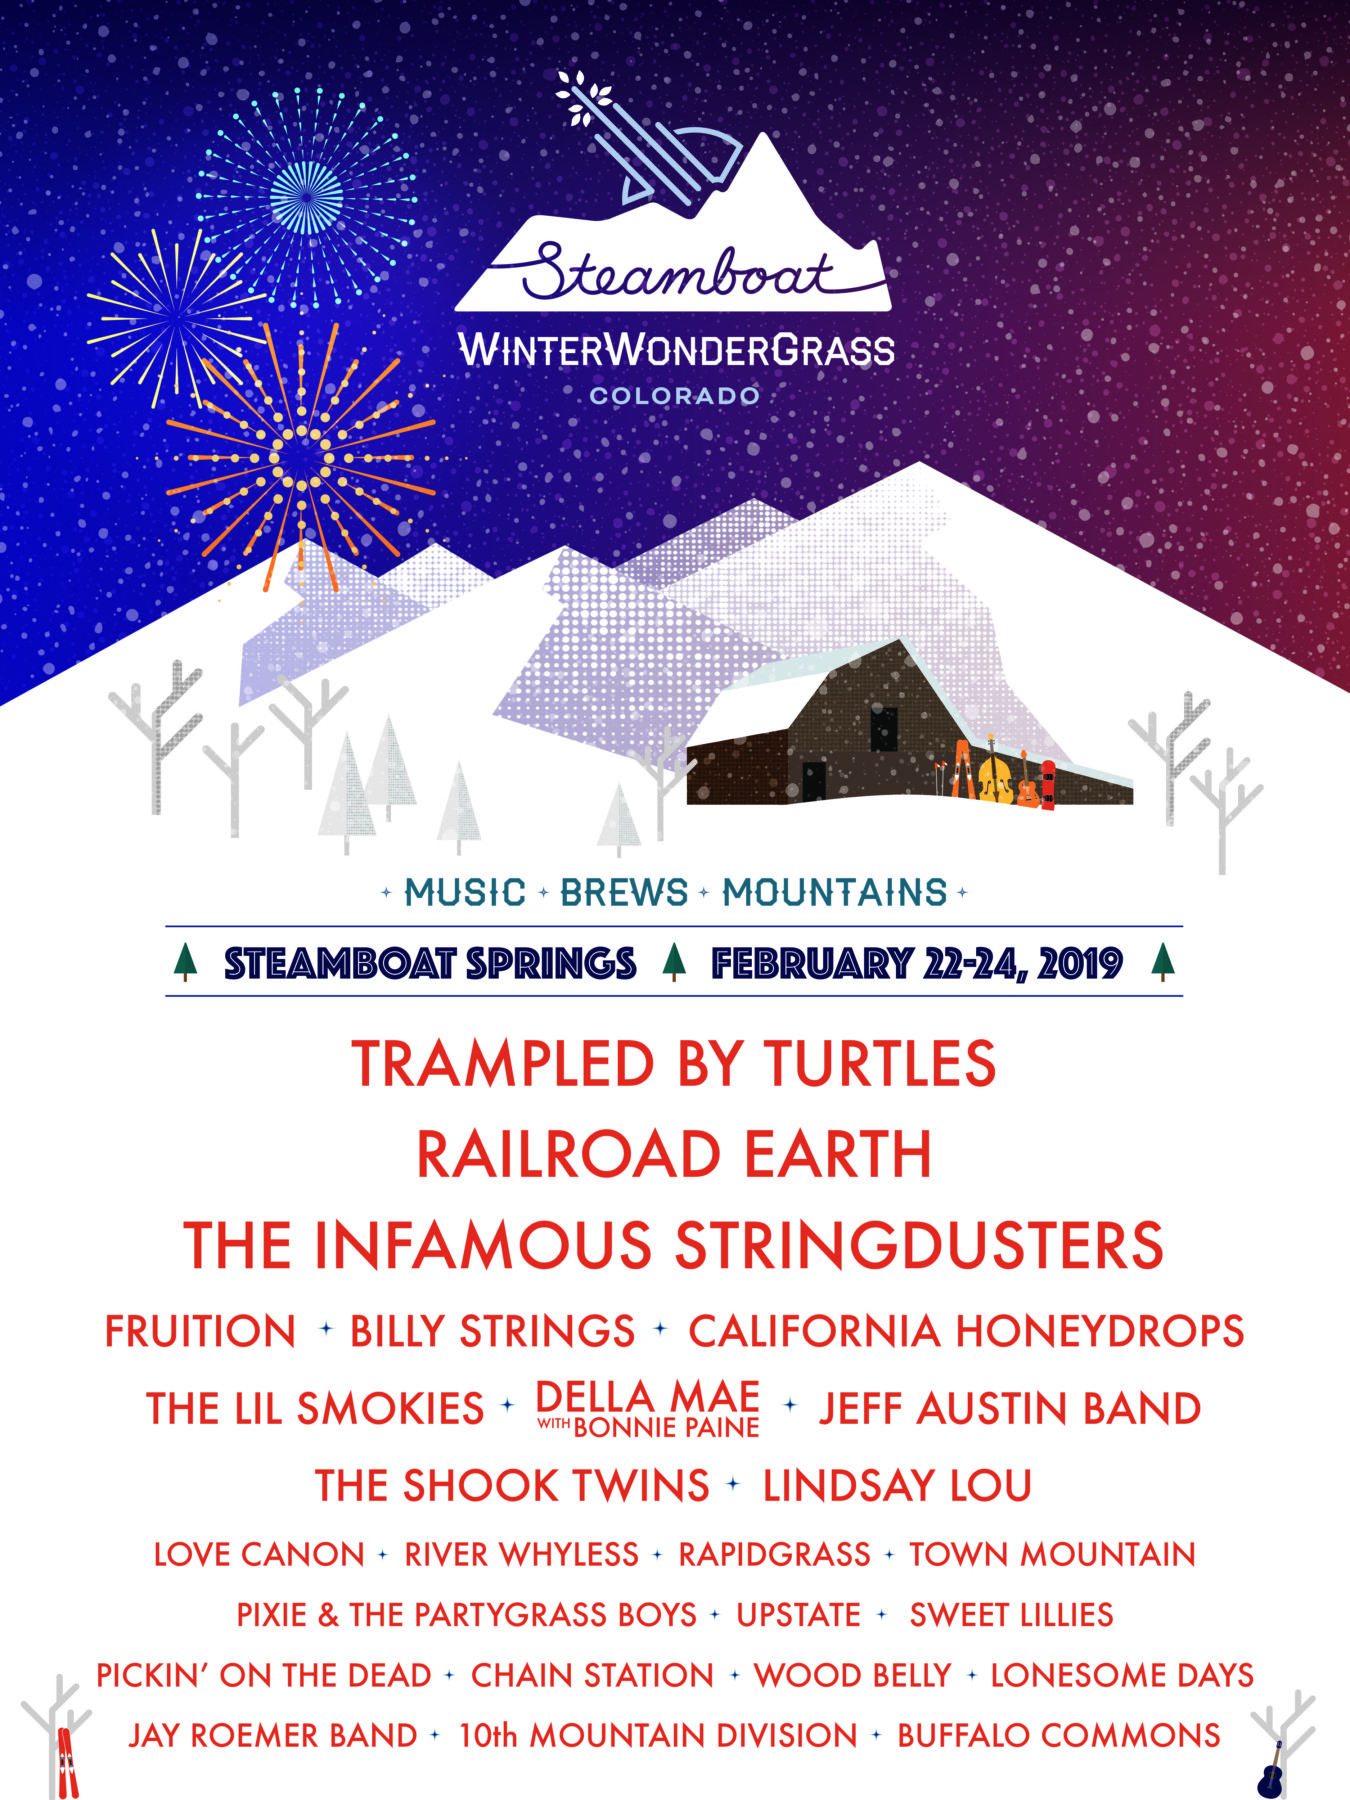 WinterWonderGrass Steamboat 2019 Lineup poster image